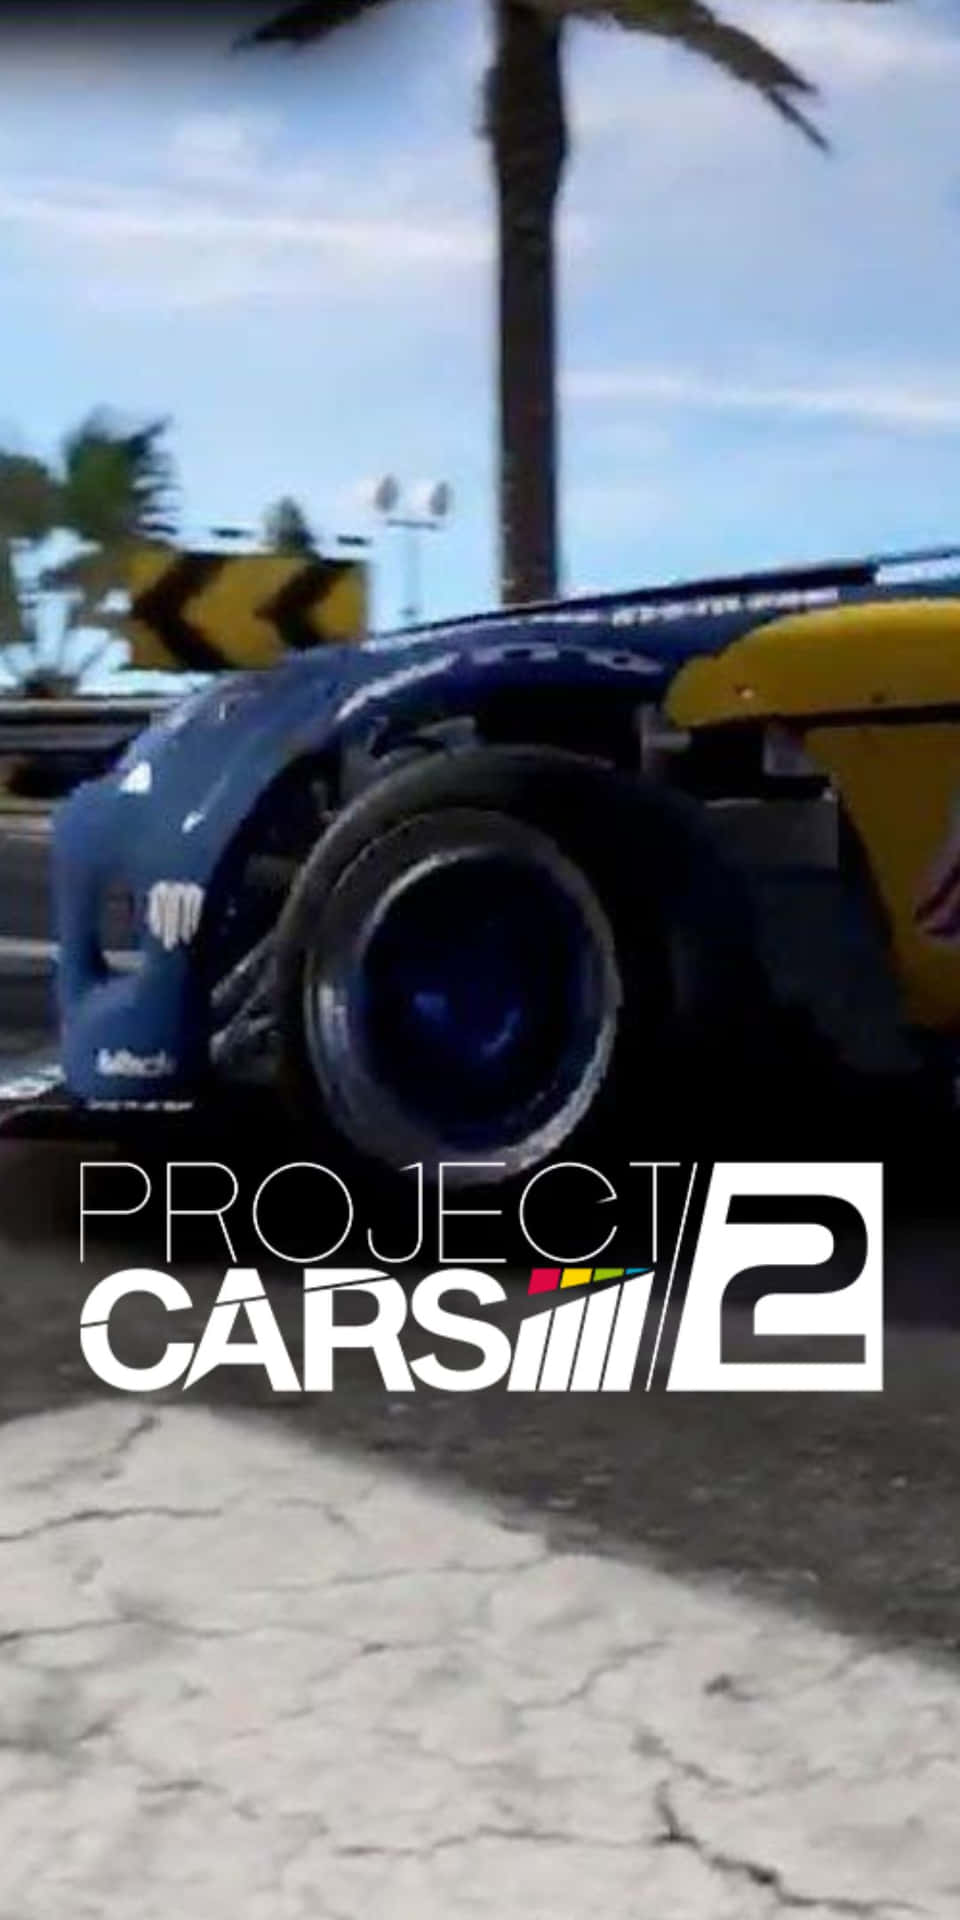 Blue Mazda MX-5 Radbul Pixel 3 Project Cars 2 Background